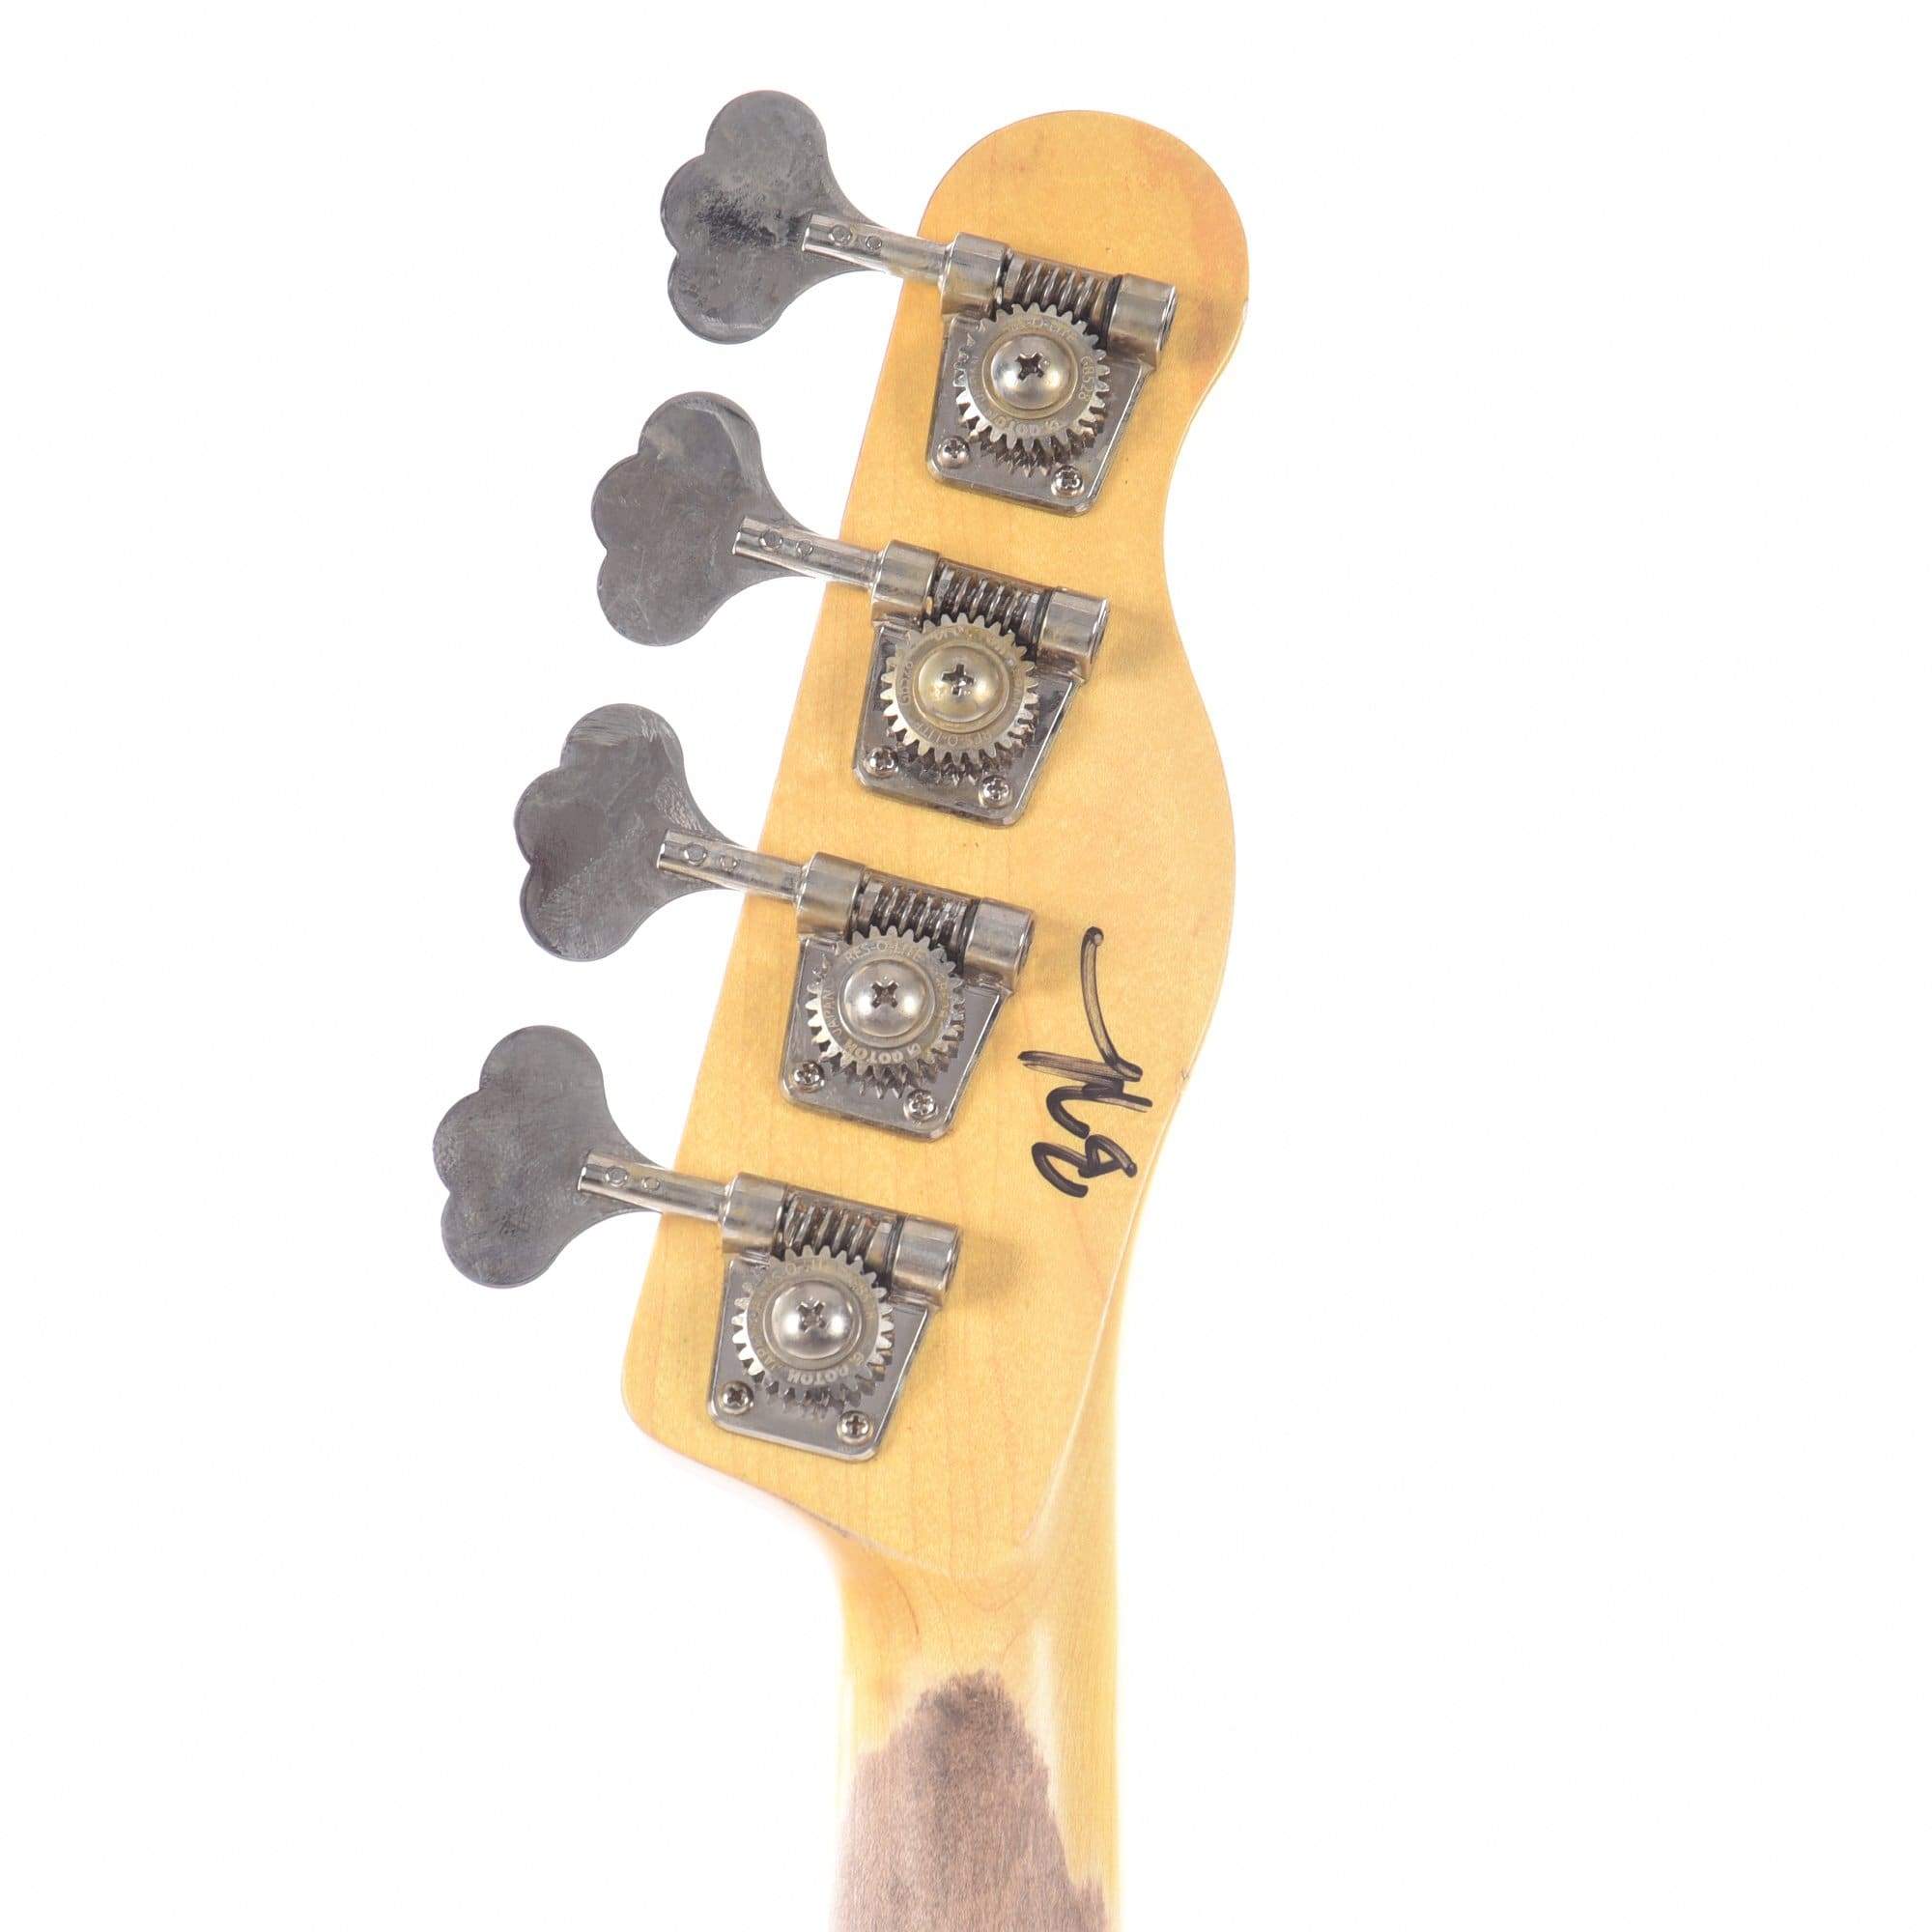 Nash PB-52 Butterscotch Blonde Light Relic LEFTY w/Lollar Pickups & 1-Ply Black Pickguard Bass Guitars / Left-Handed